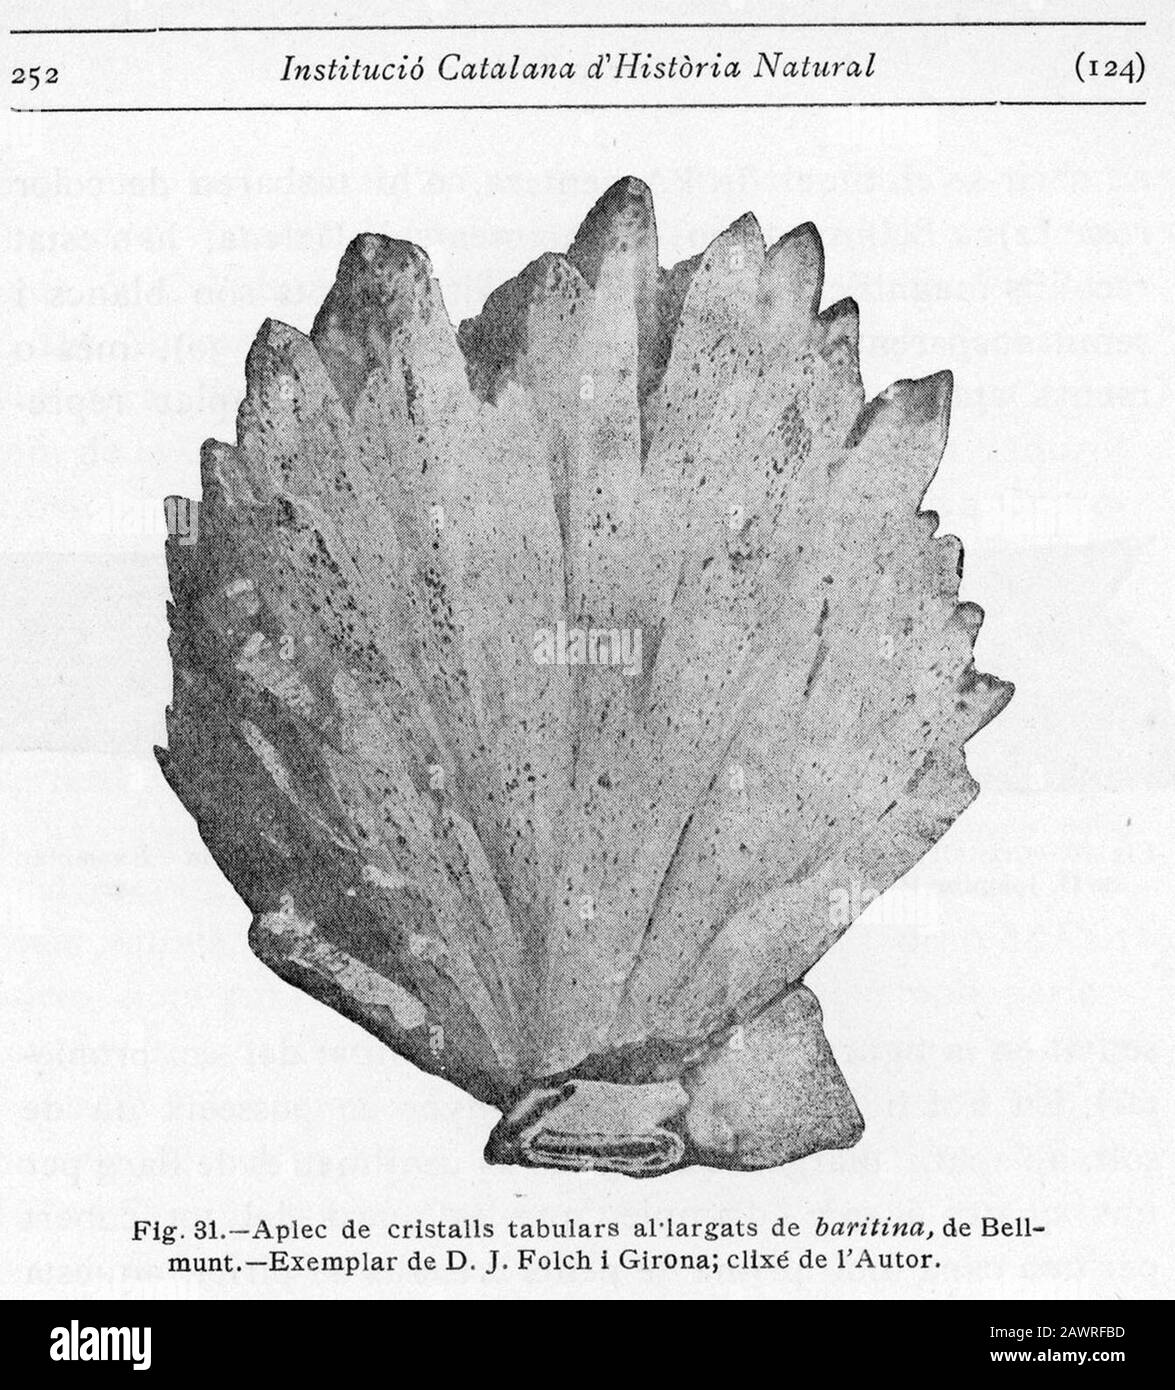 Fotografía de un ejemplar de baritina de la colección Folch, publicada en Els Minerals de Catalunya en 1920. Stock Photo